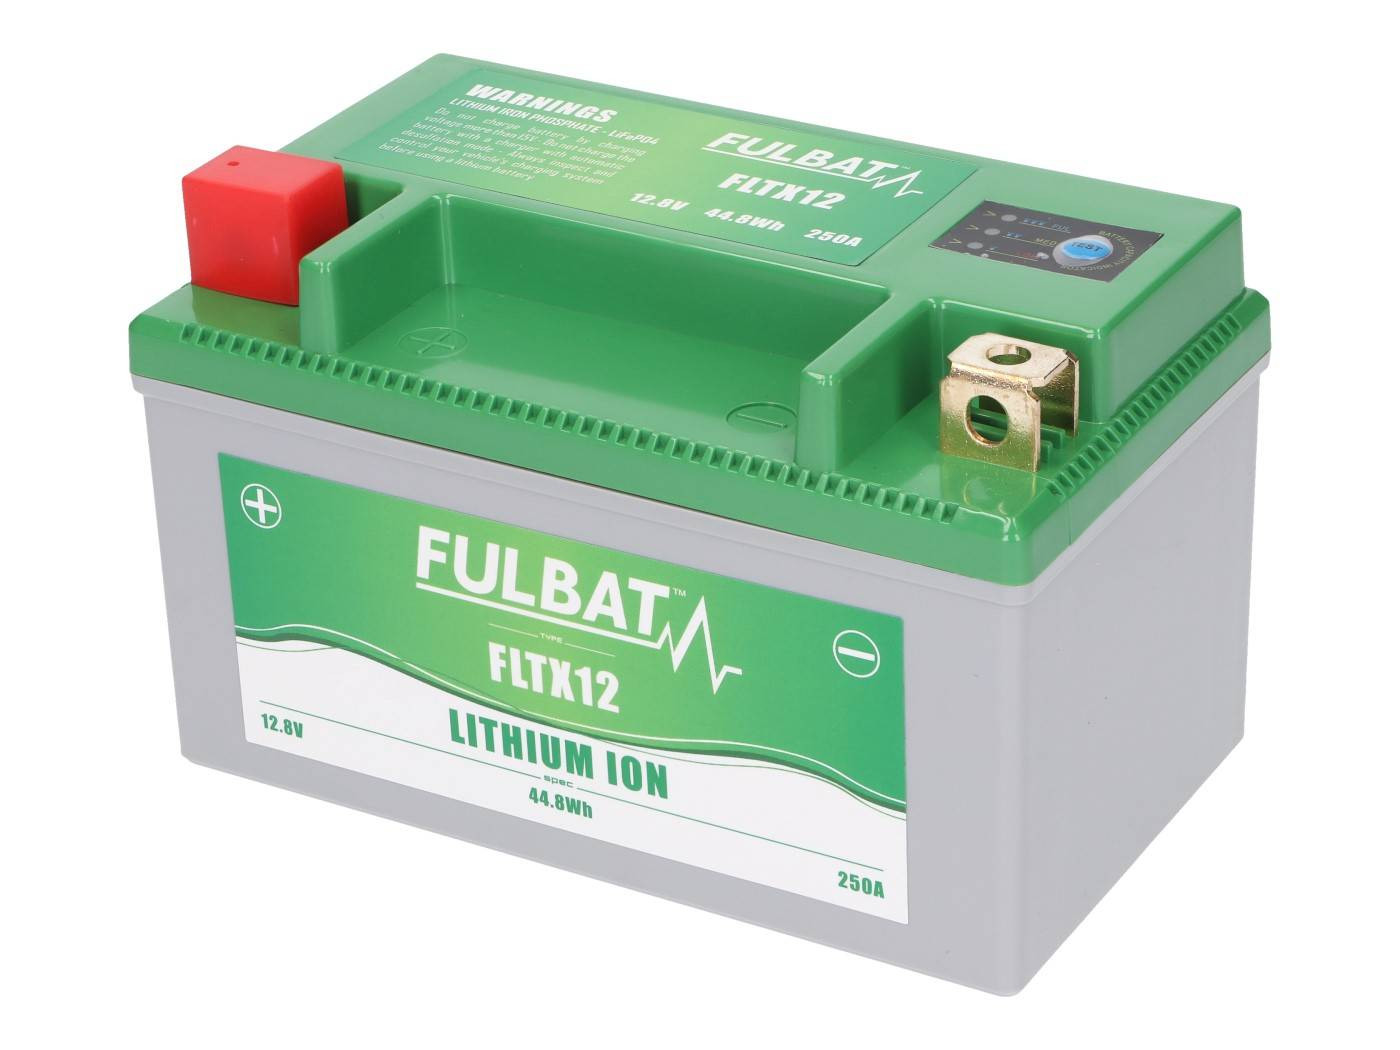 Fulbat FLTX12 lítium-ion akkumulátor